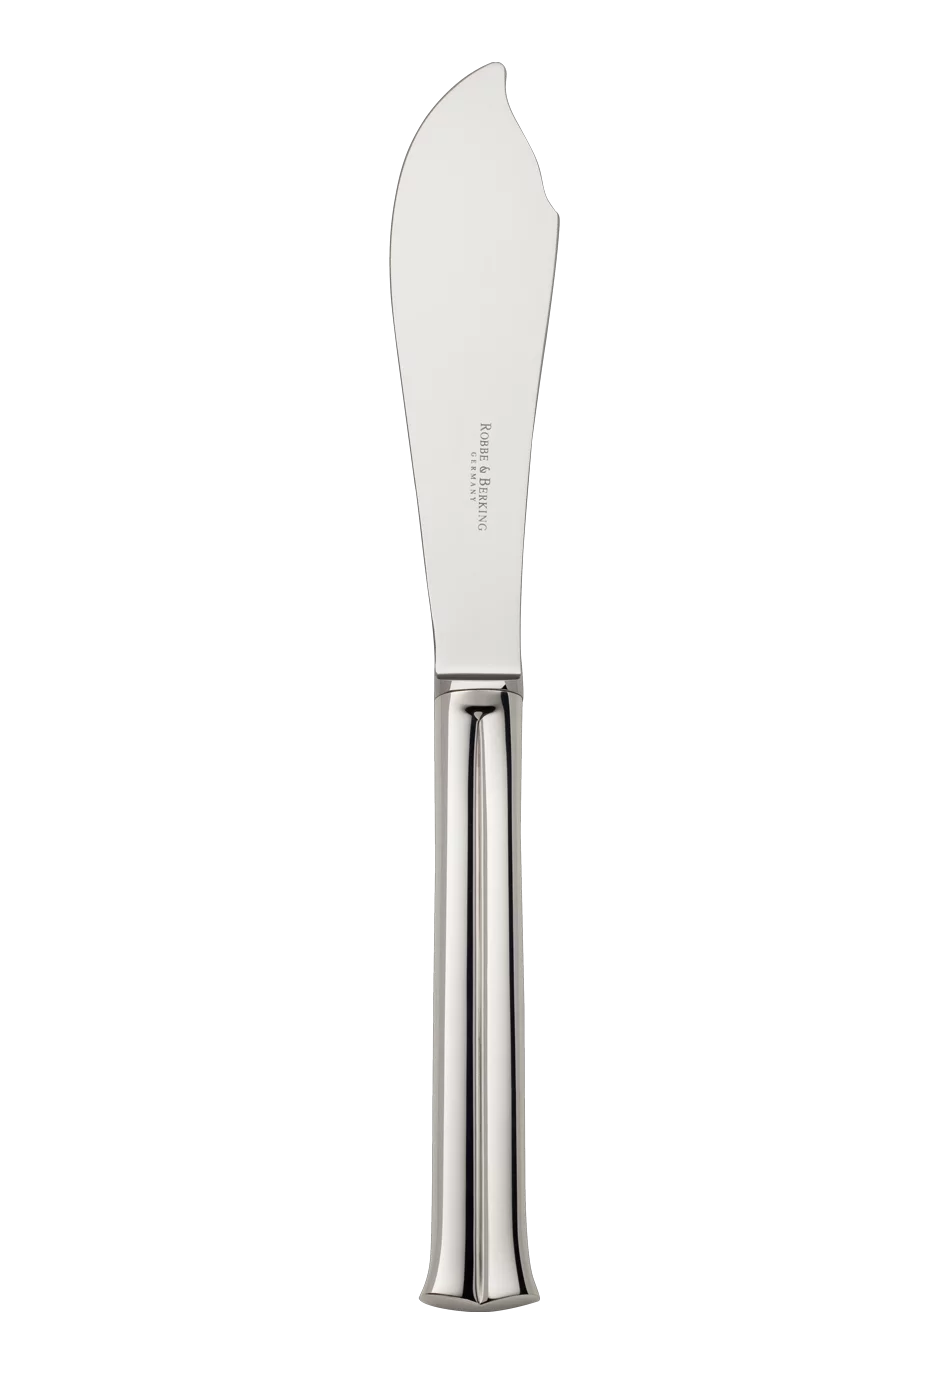 Viva Tart Knife (150g massive silverplated)